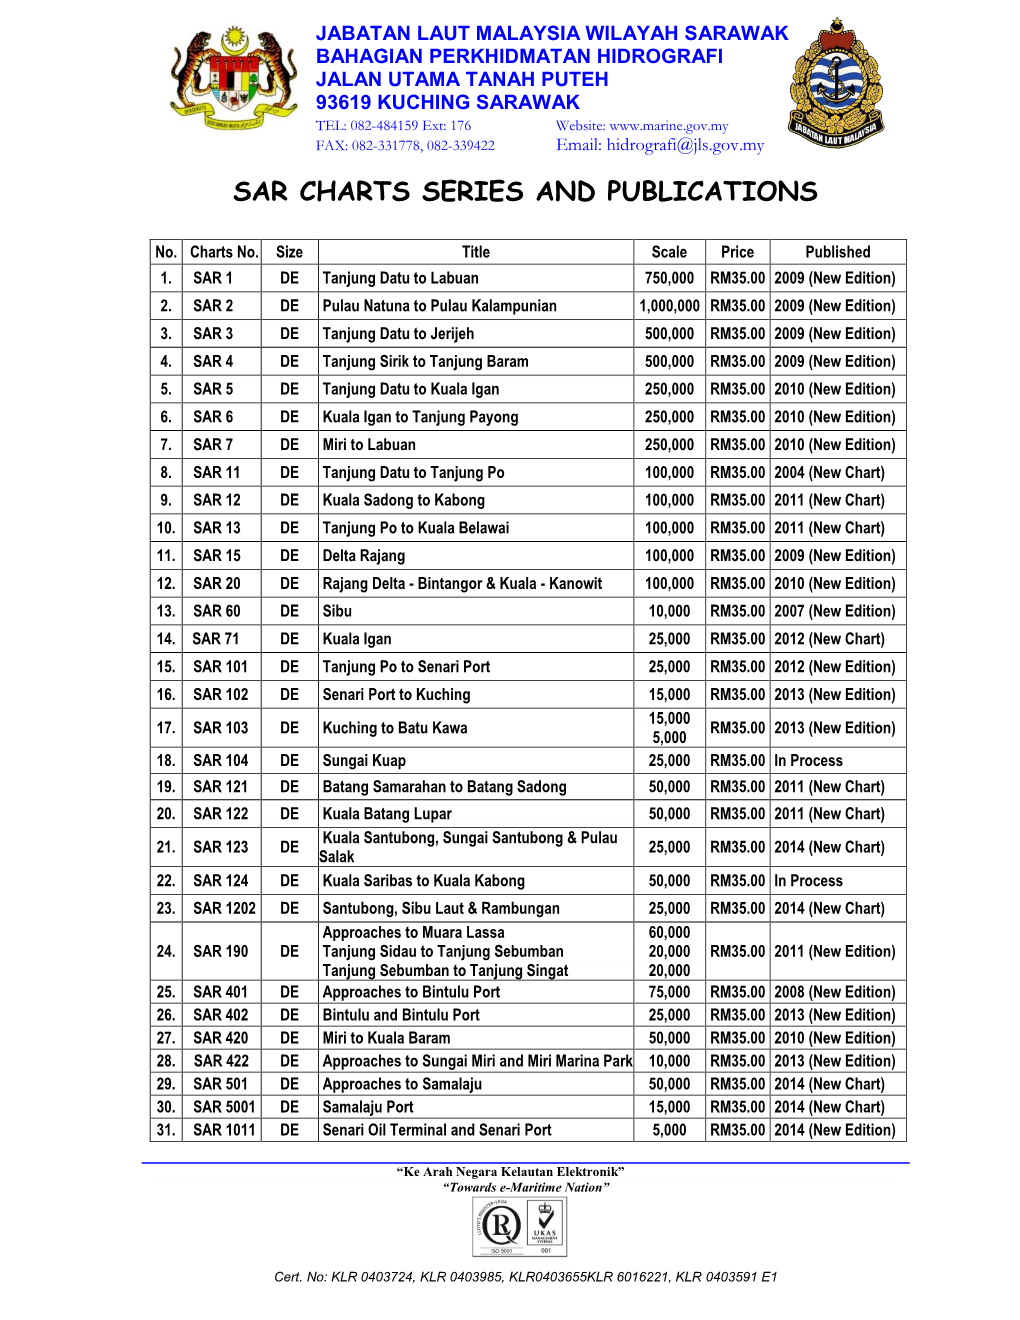 Sar Charts Series and Publications